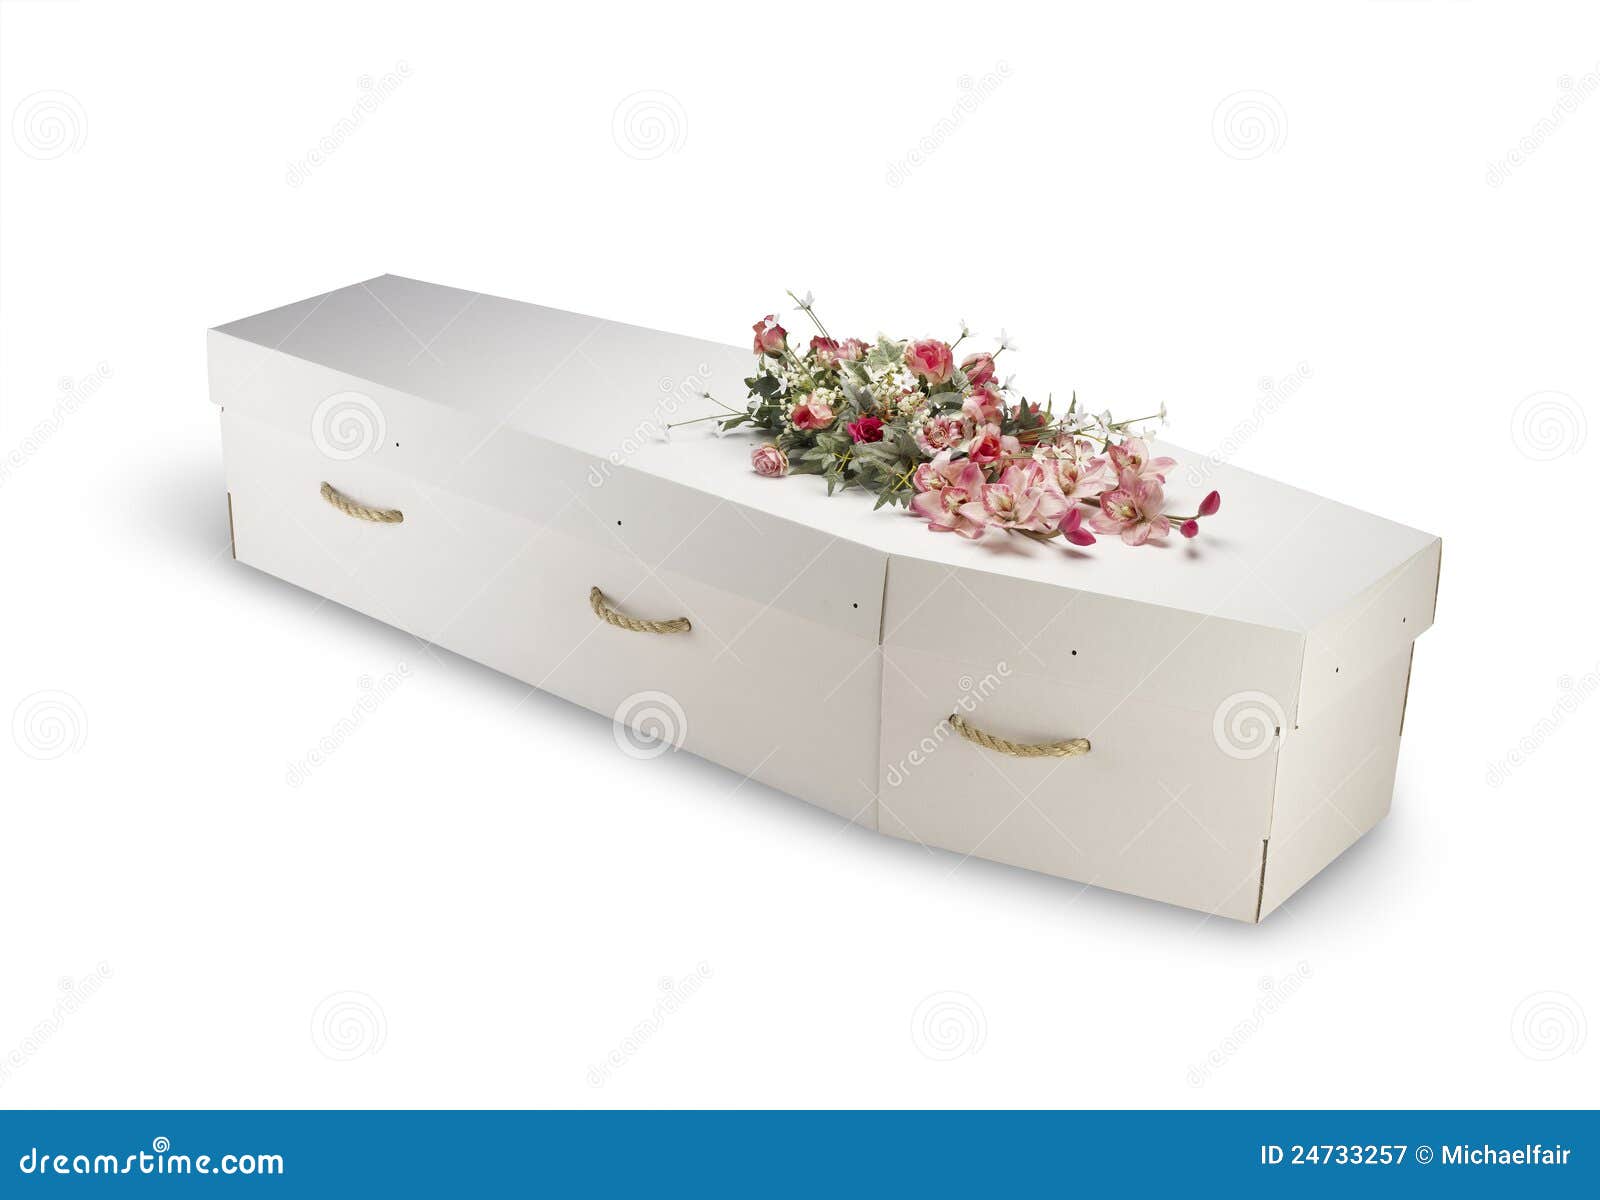 cardboard bio-degradable eco coffin  with